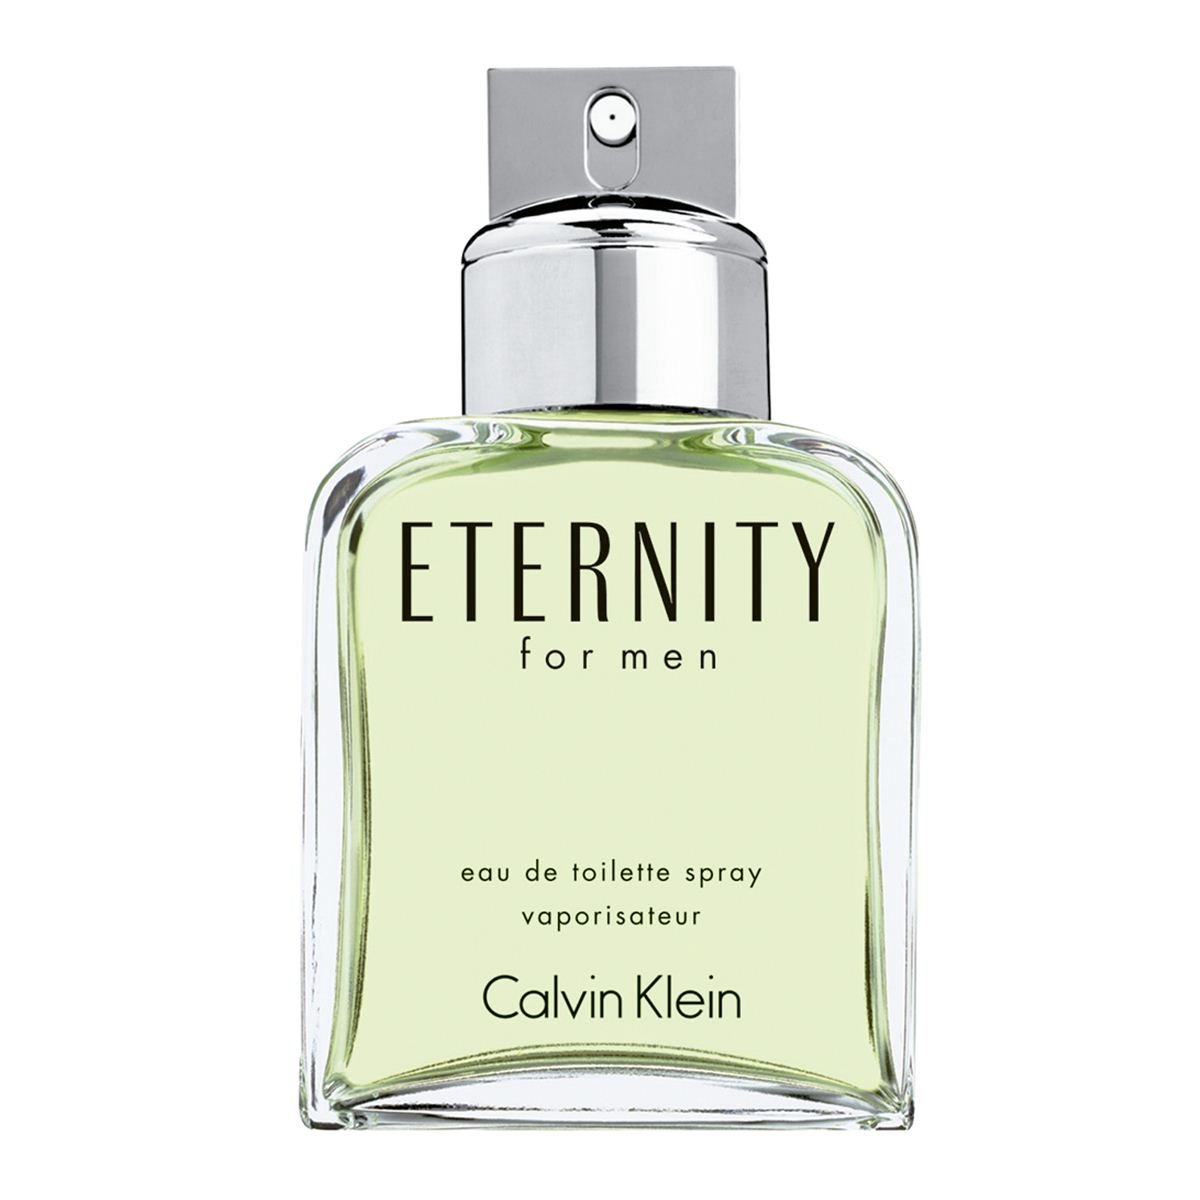 "Eternity for Men" de Calvin Klein